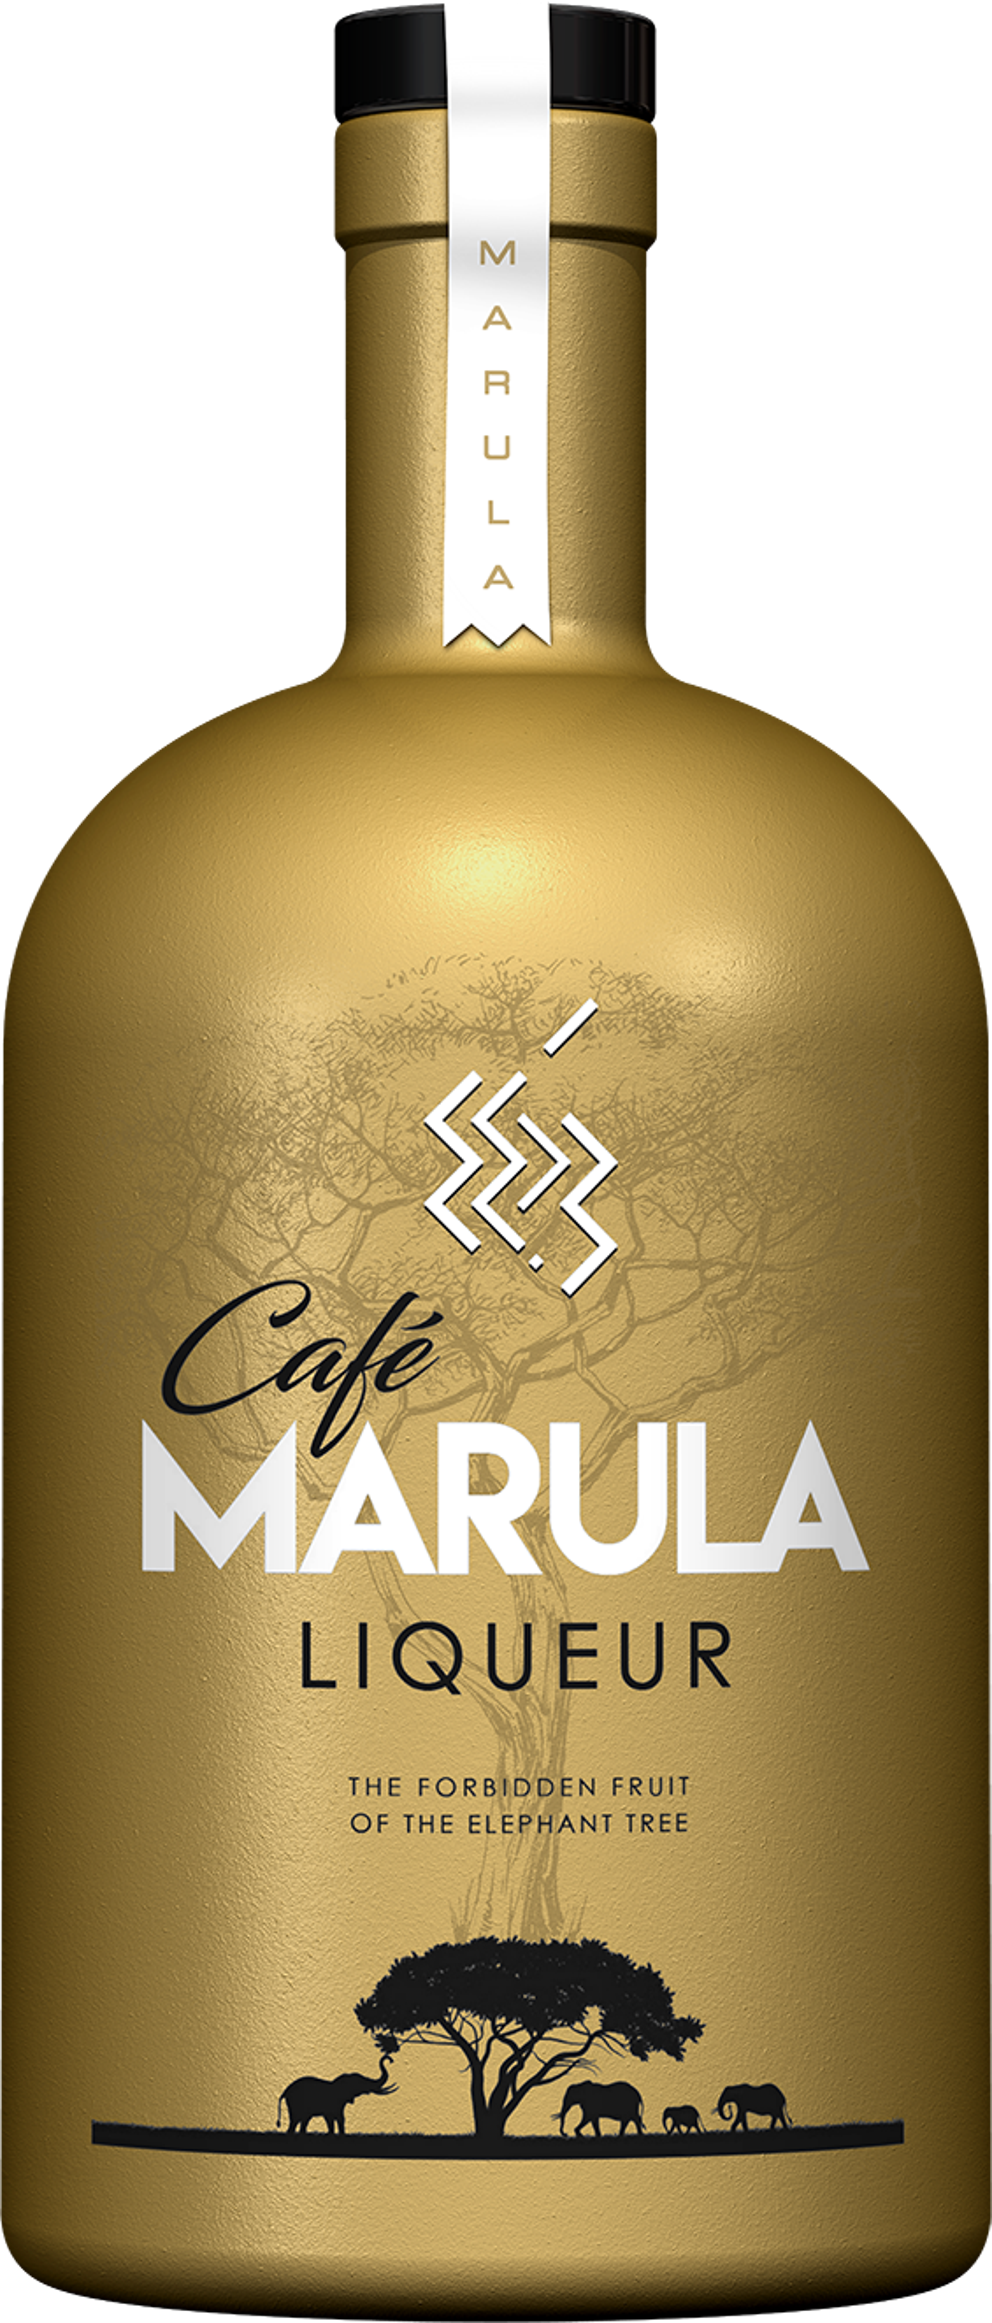 Cafe Marula 3D.png